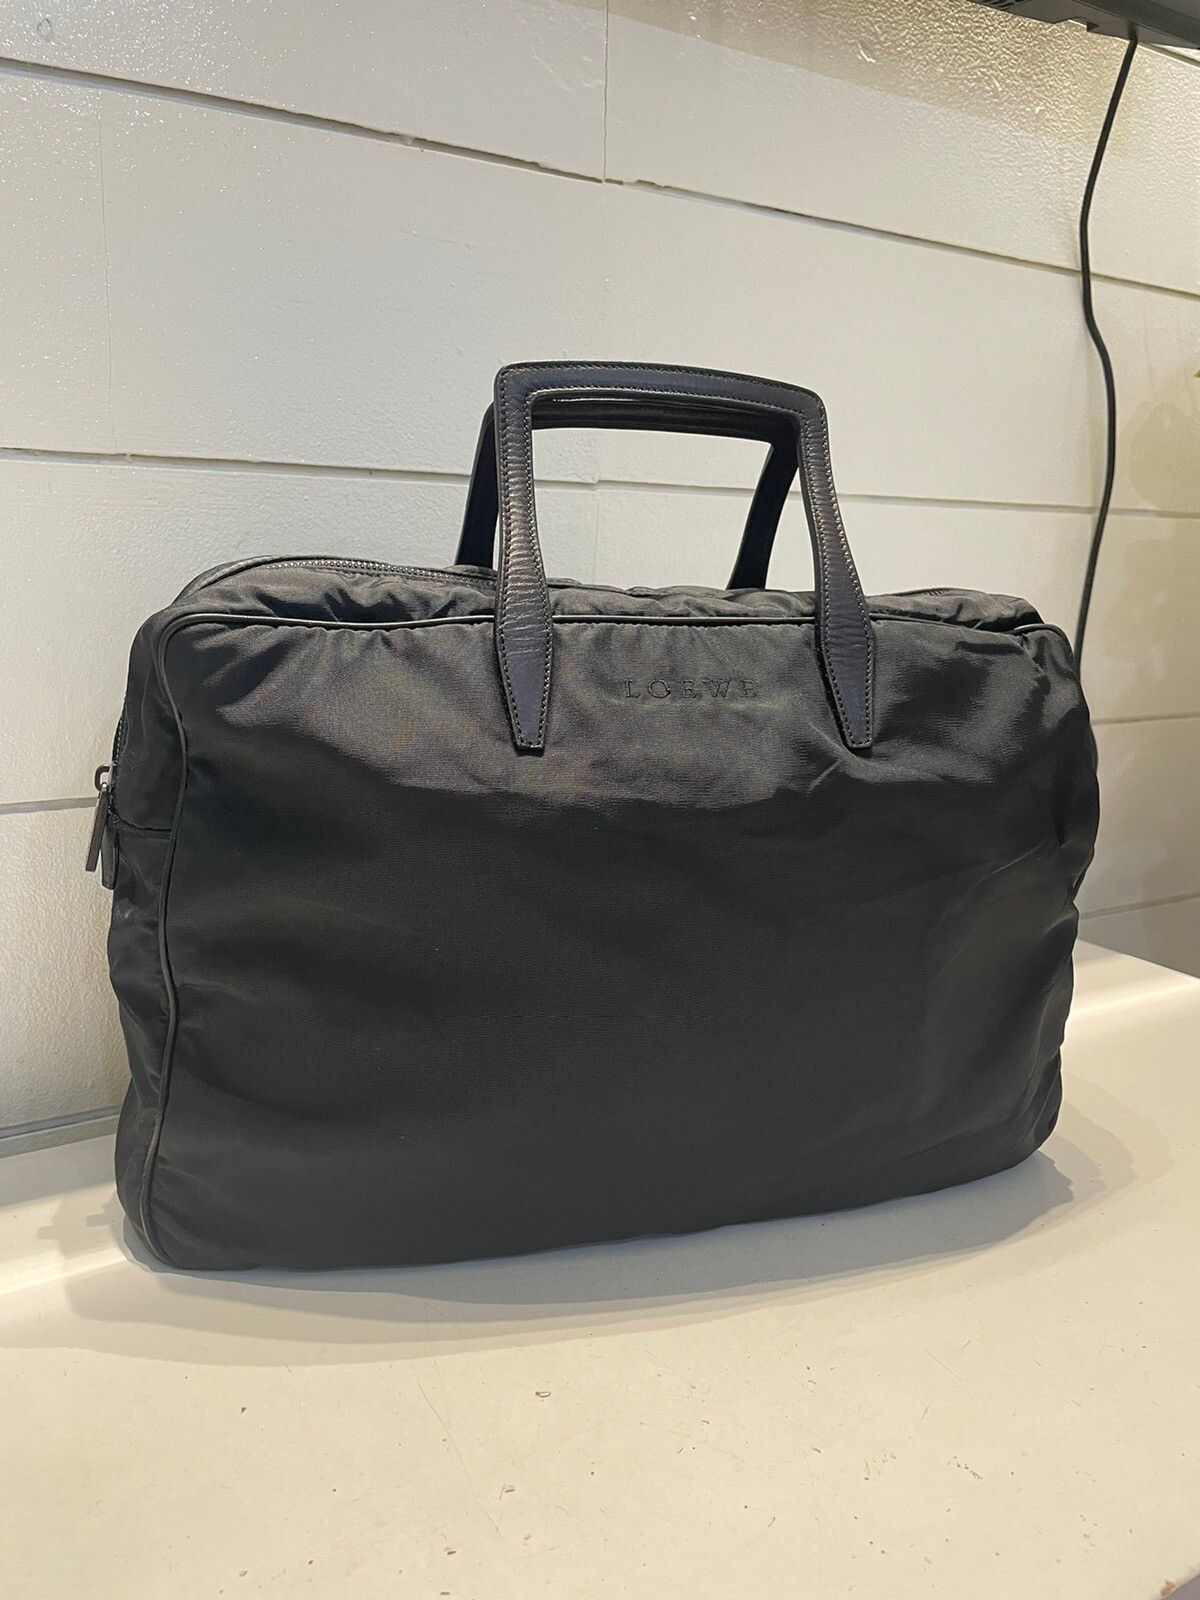 Loewe Black Nylon Leather Handle Travel Bag - 8